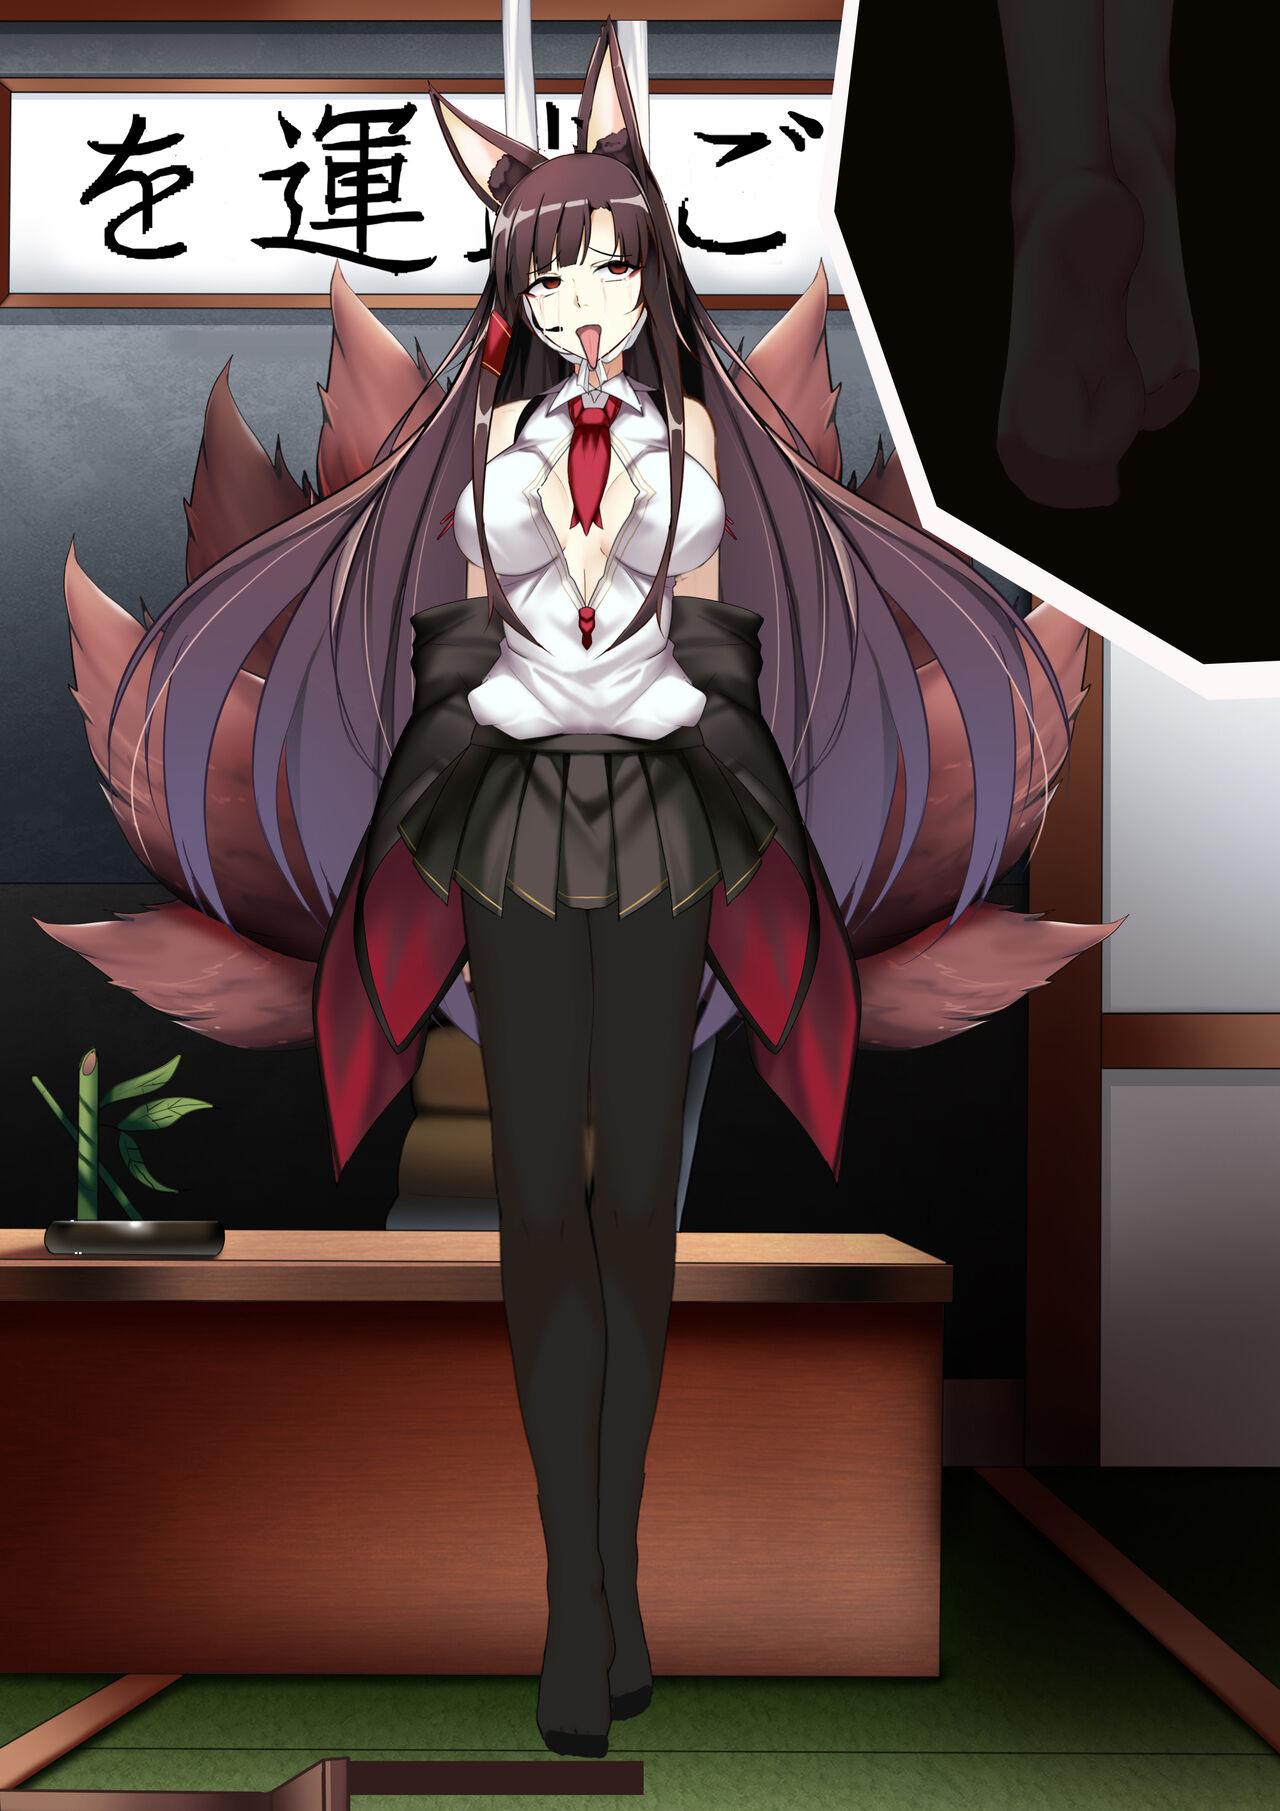 Akagi hanged herself in her office 43